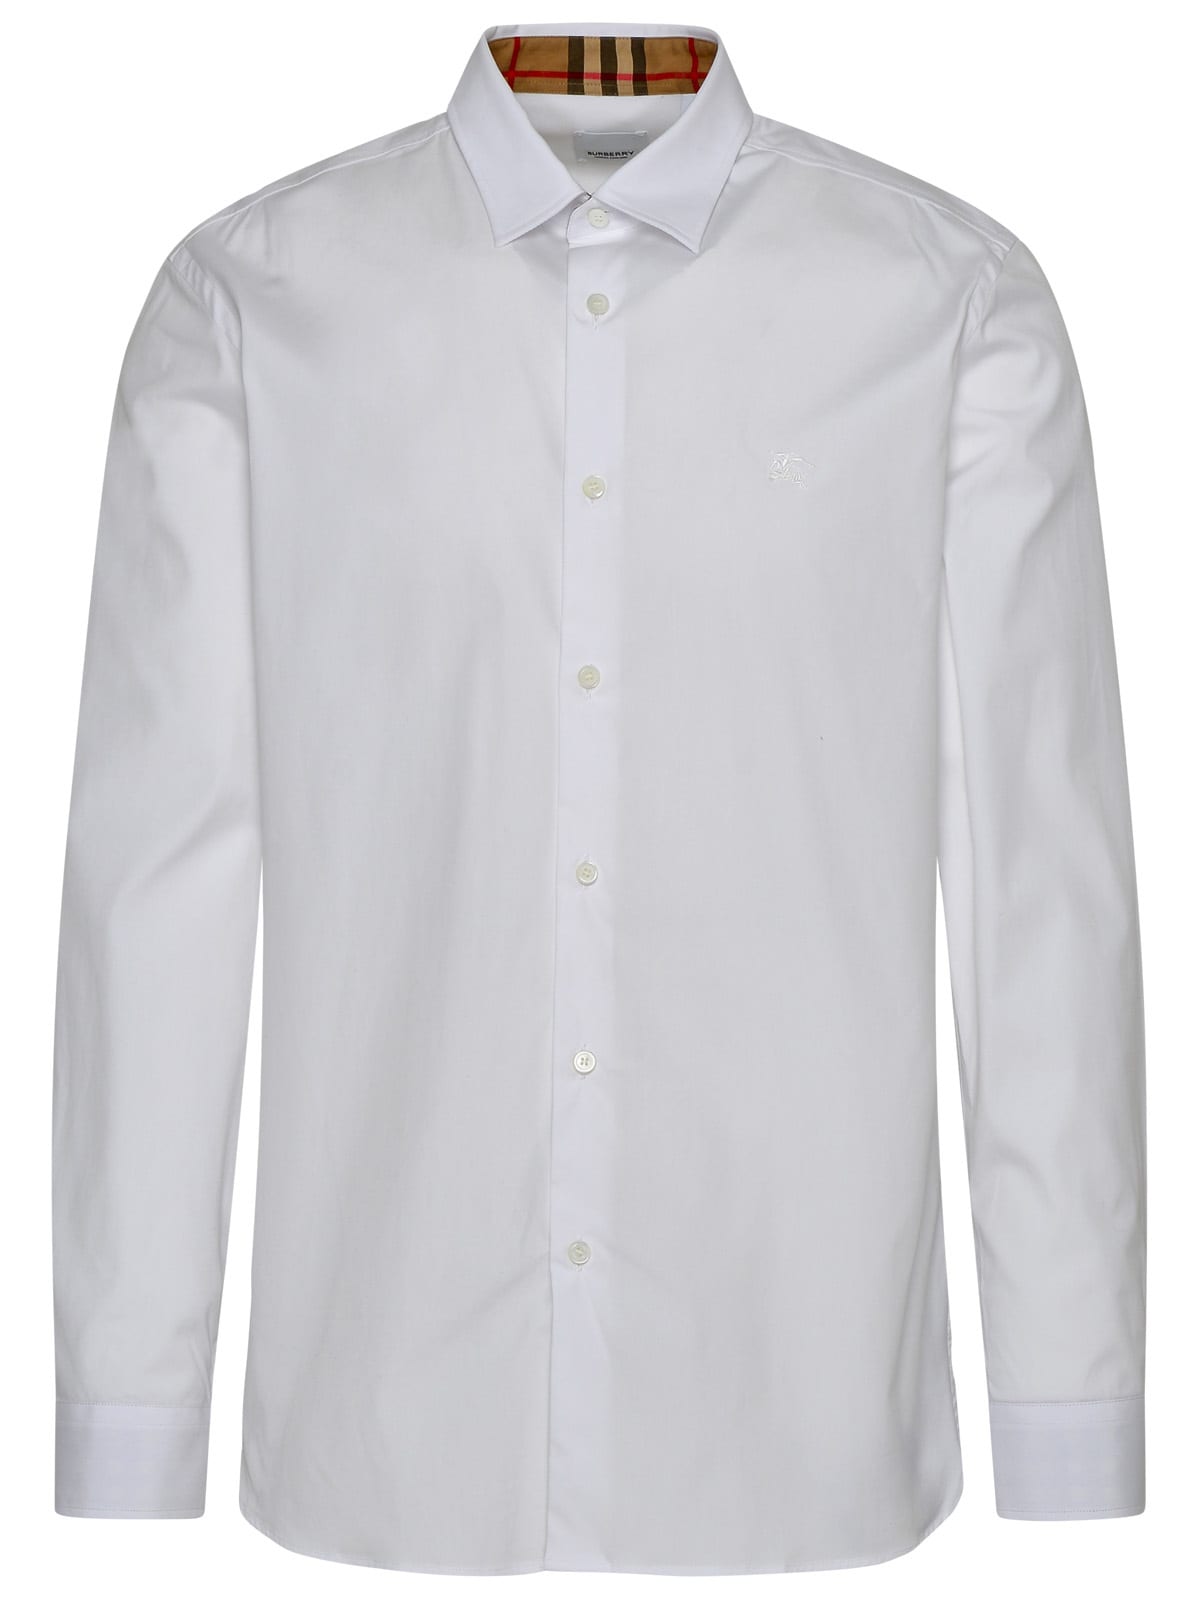 Sherfield Shirt In White Cotton